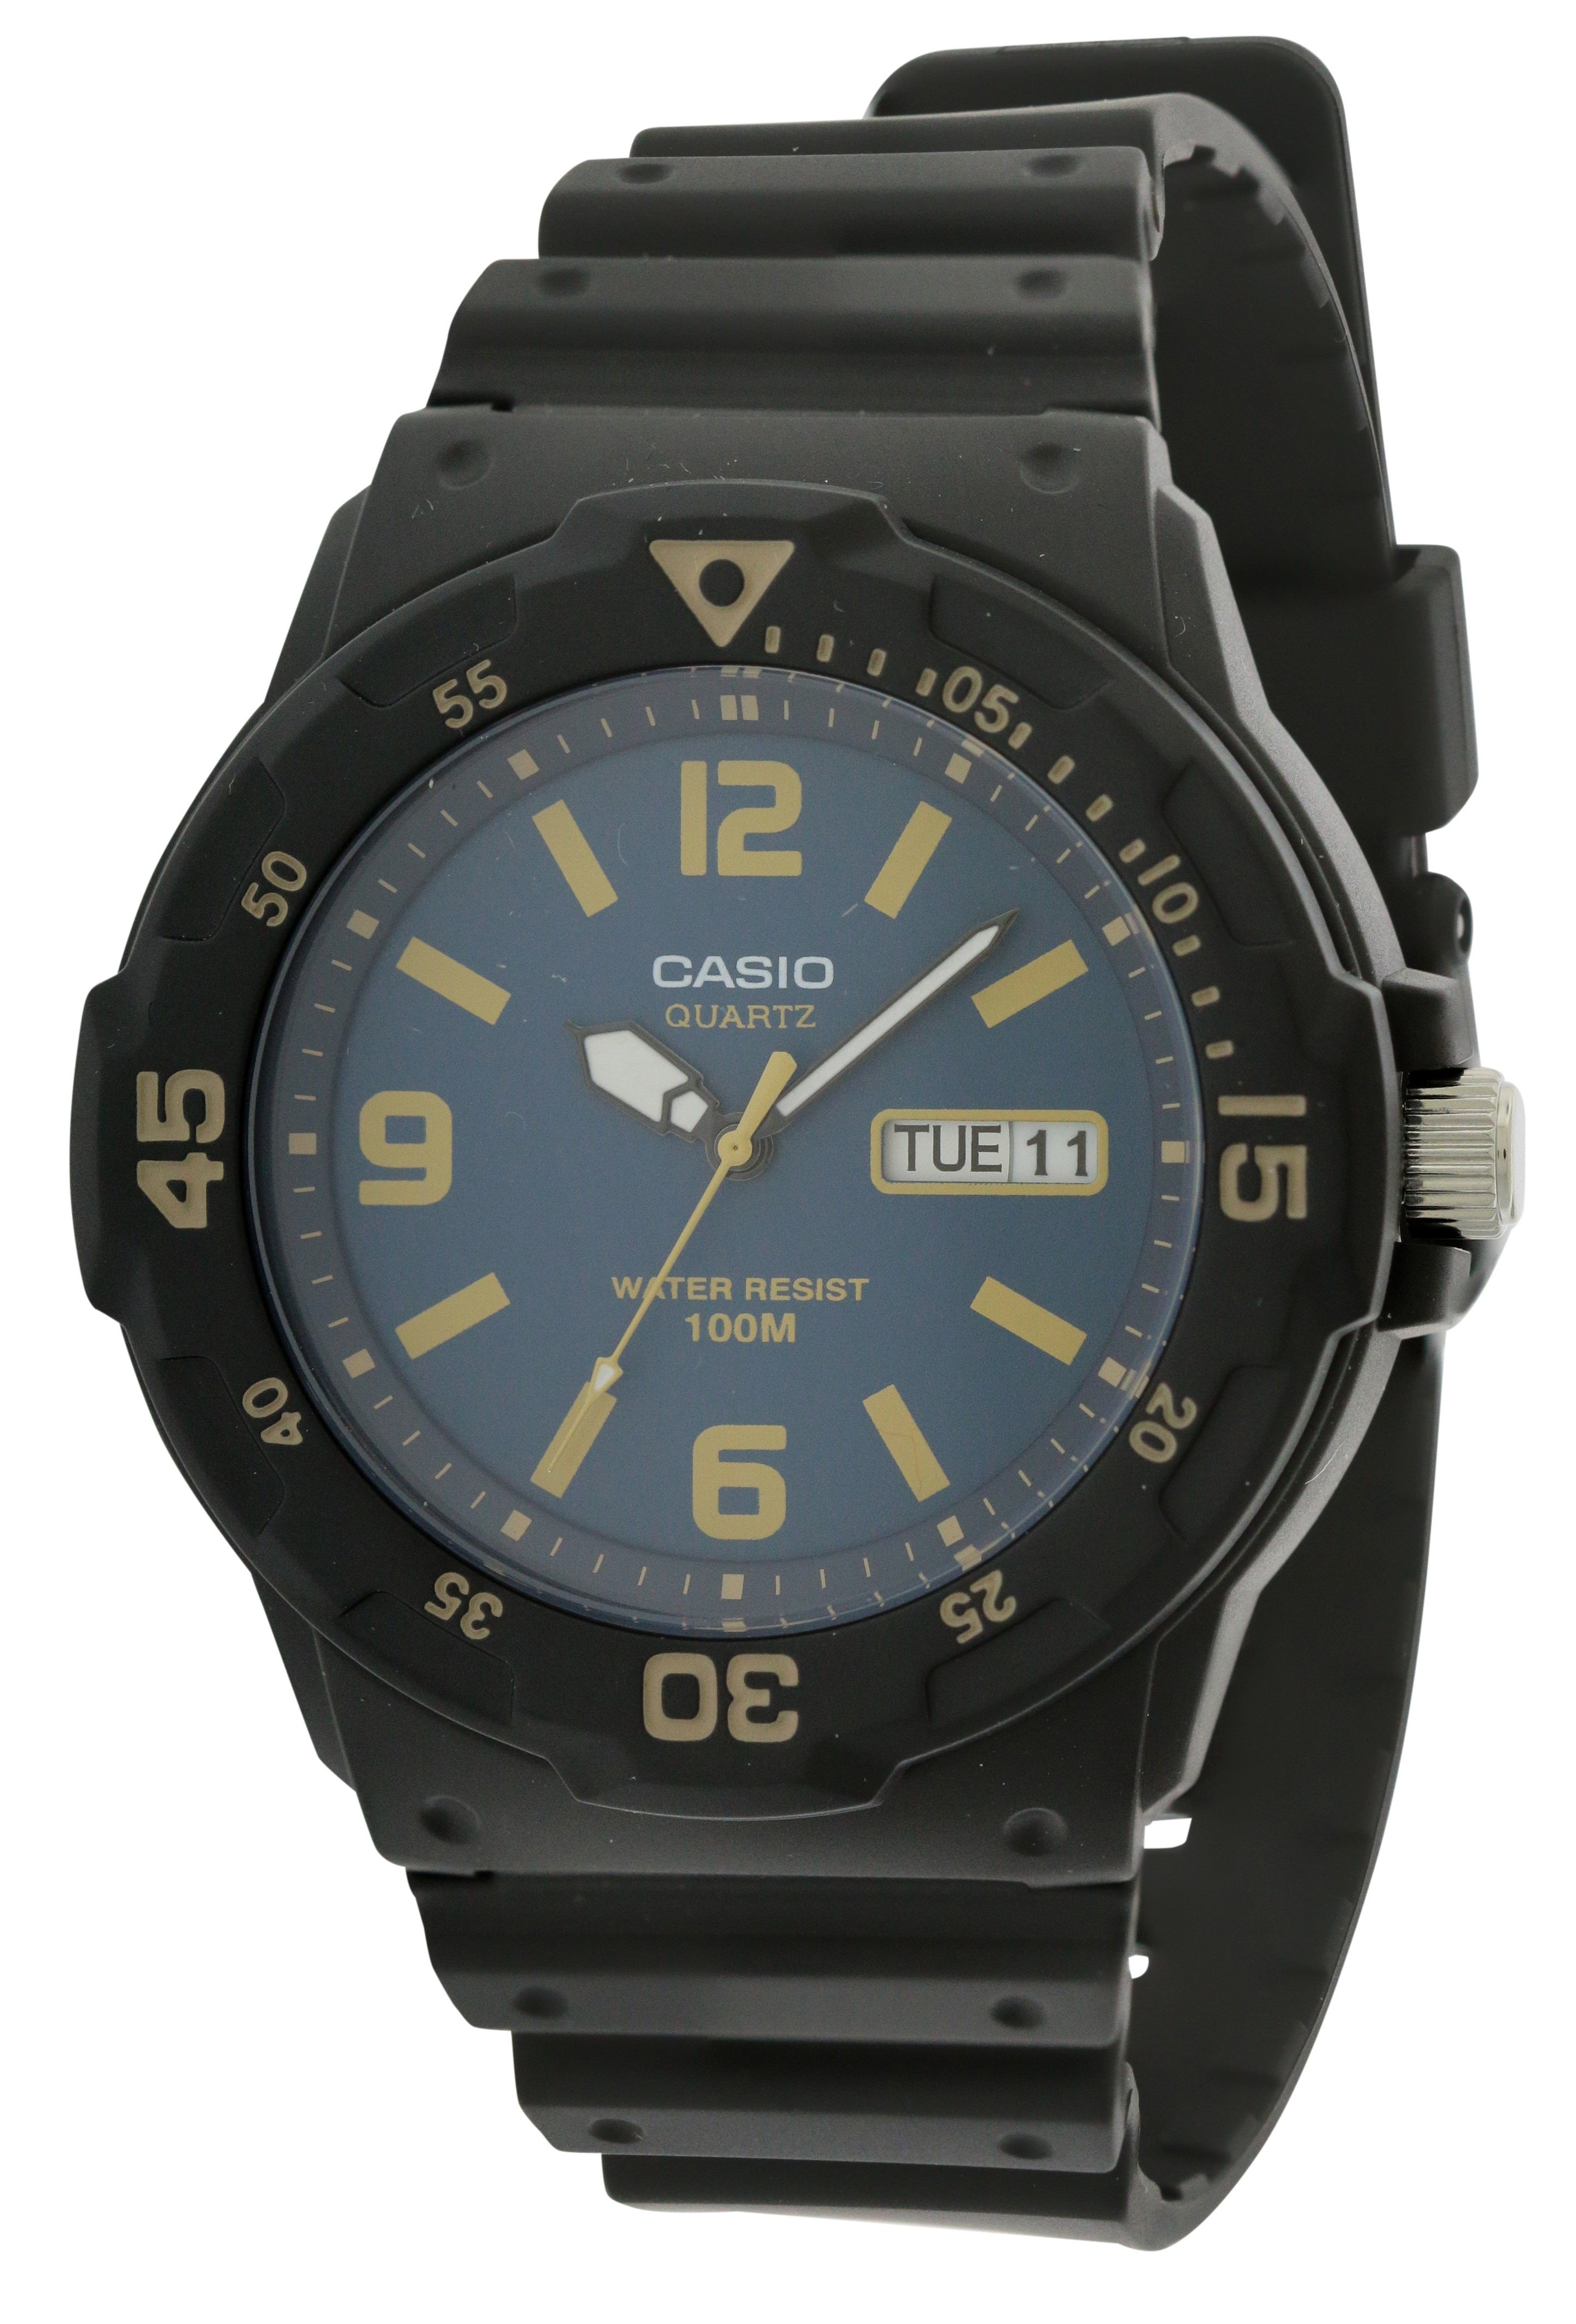 Casio Classic Neo-Display Resin Unisex Watch